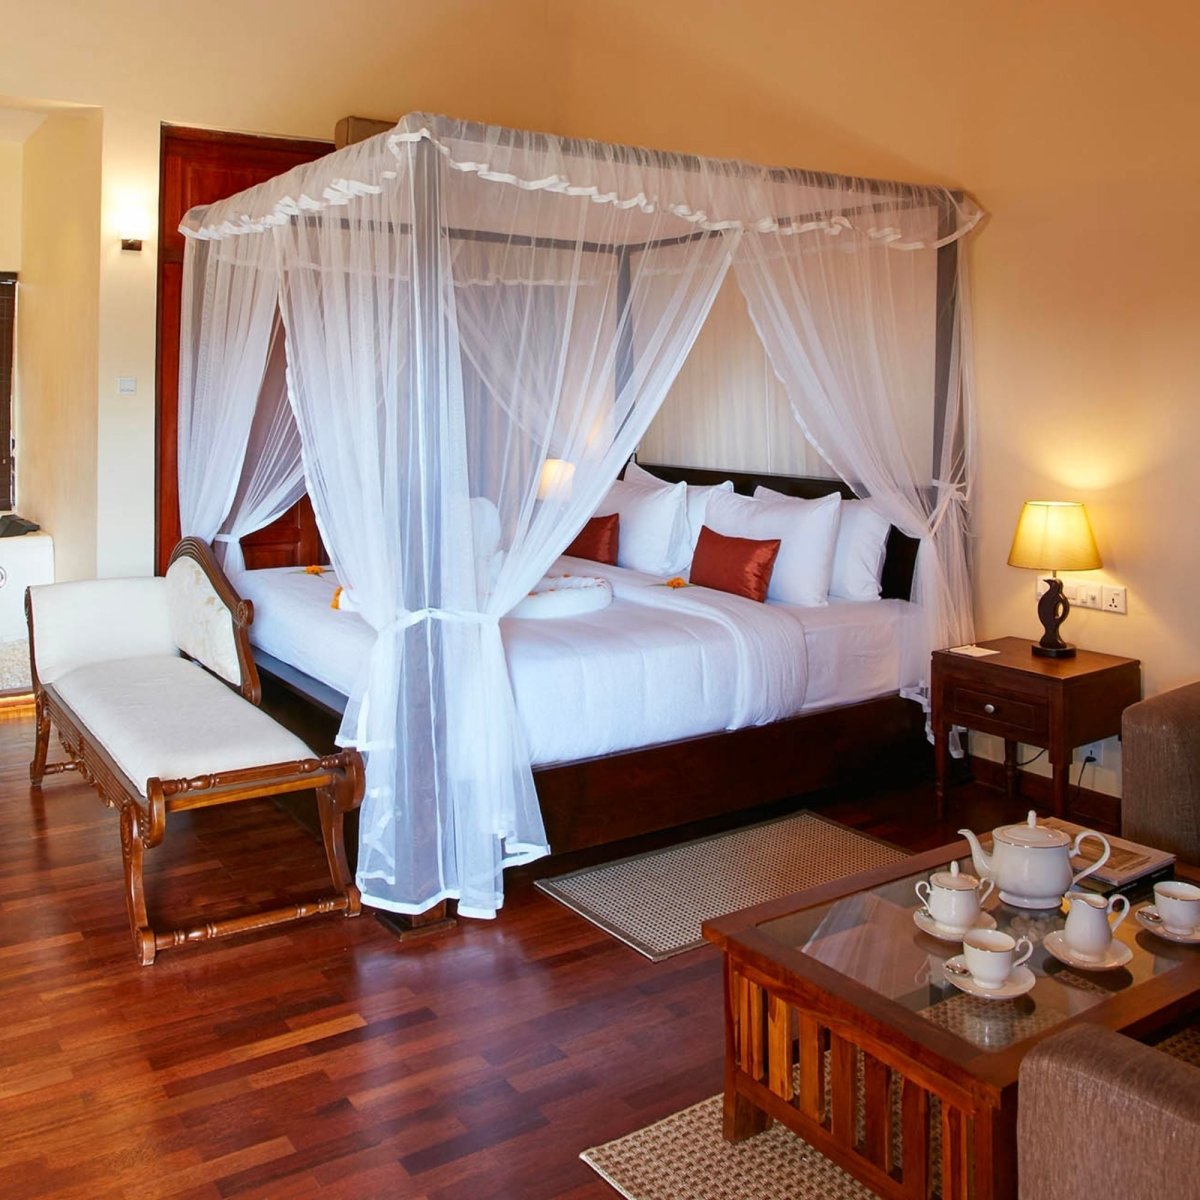 3 or 4 Days with Private Jacuzzi, Full-board, Pools & Safari for 2 people - Seerock The King’s Domain Hotel, Sigiriya | Feelo